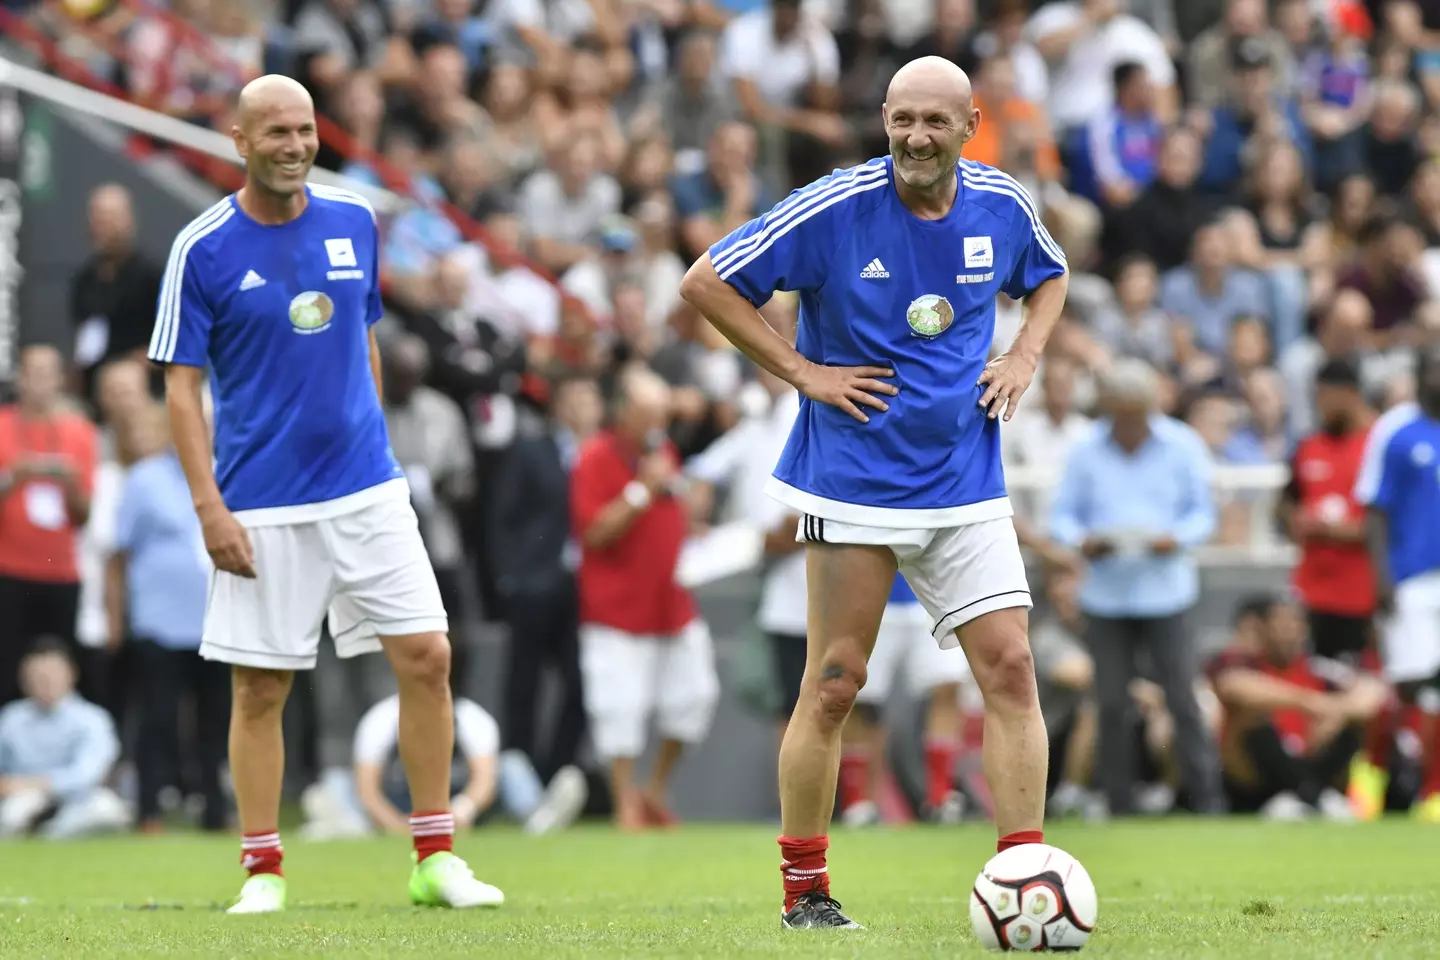 Fabien Barthez and Zinedine Zidane playing football